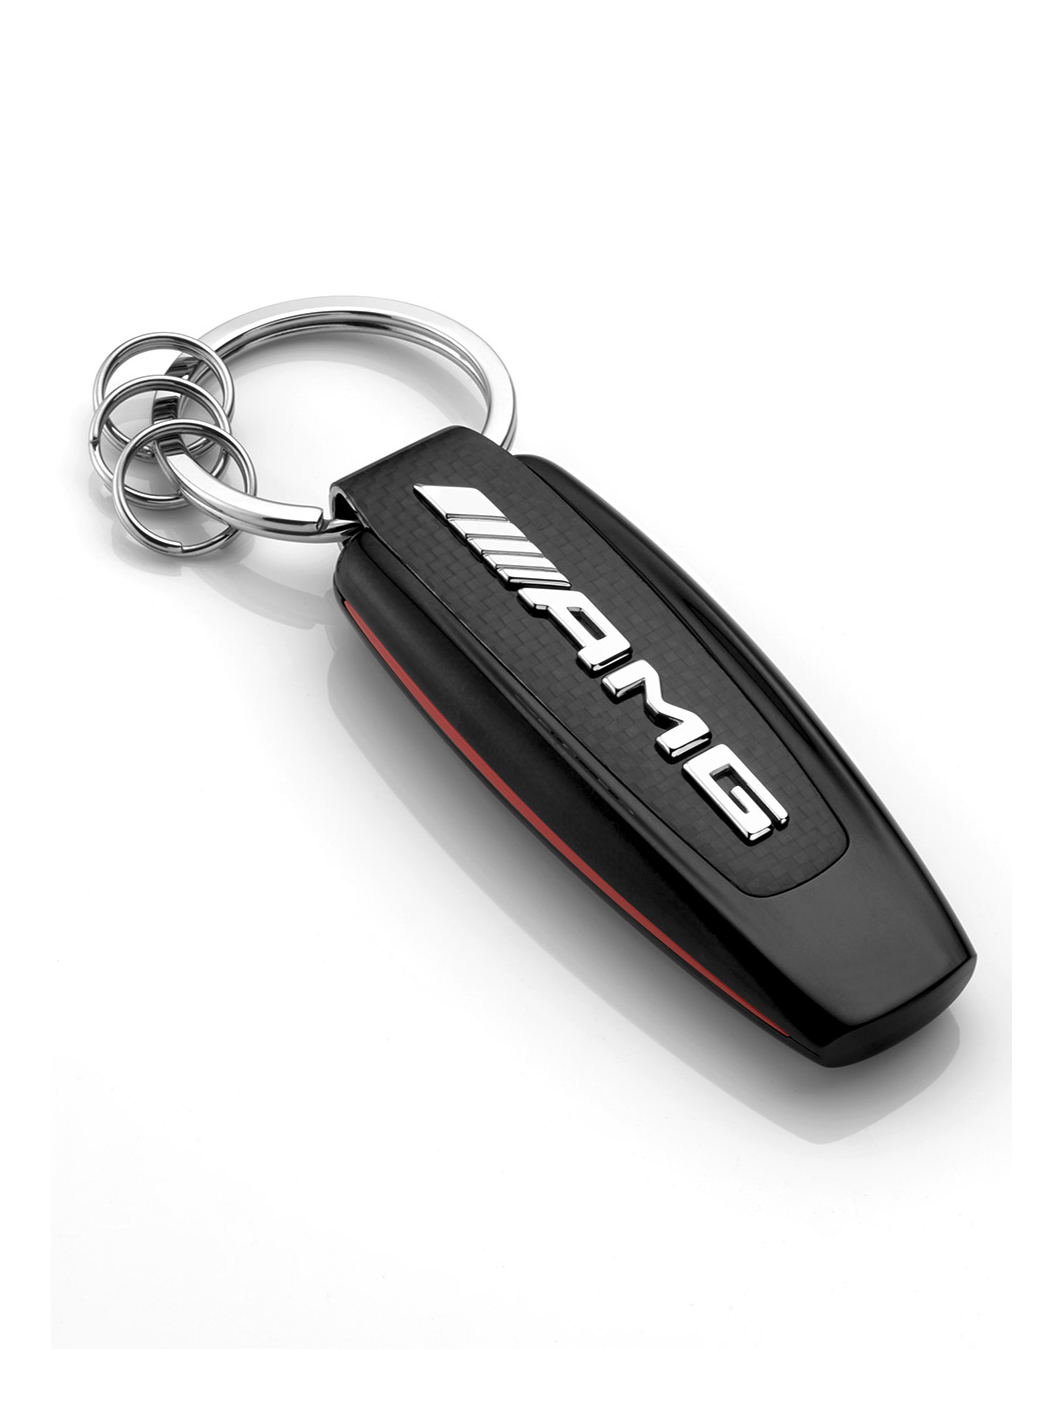 3D C Class Letter Logo Alloy Car Keychain Ring Decoration Gift Emblem AMG Sport